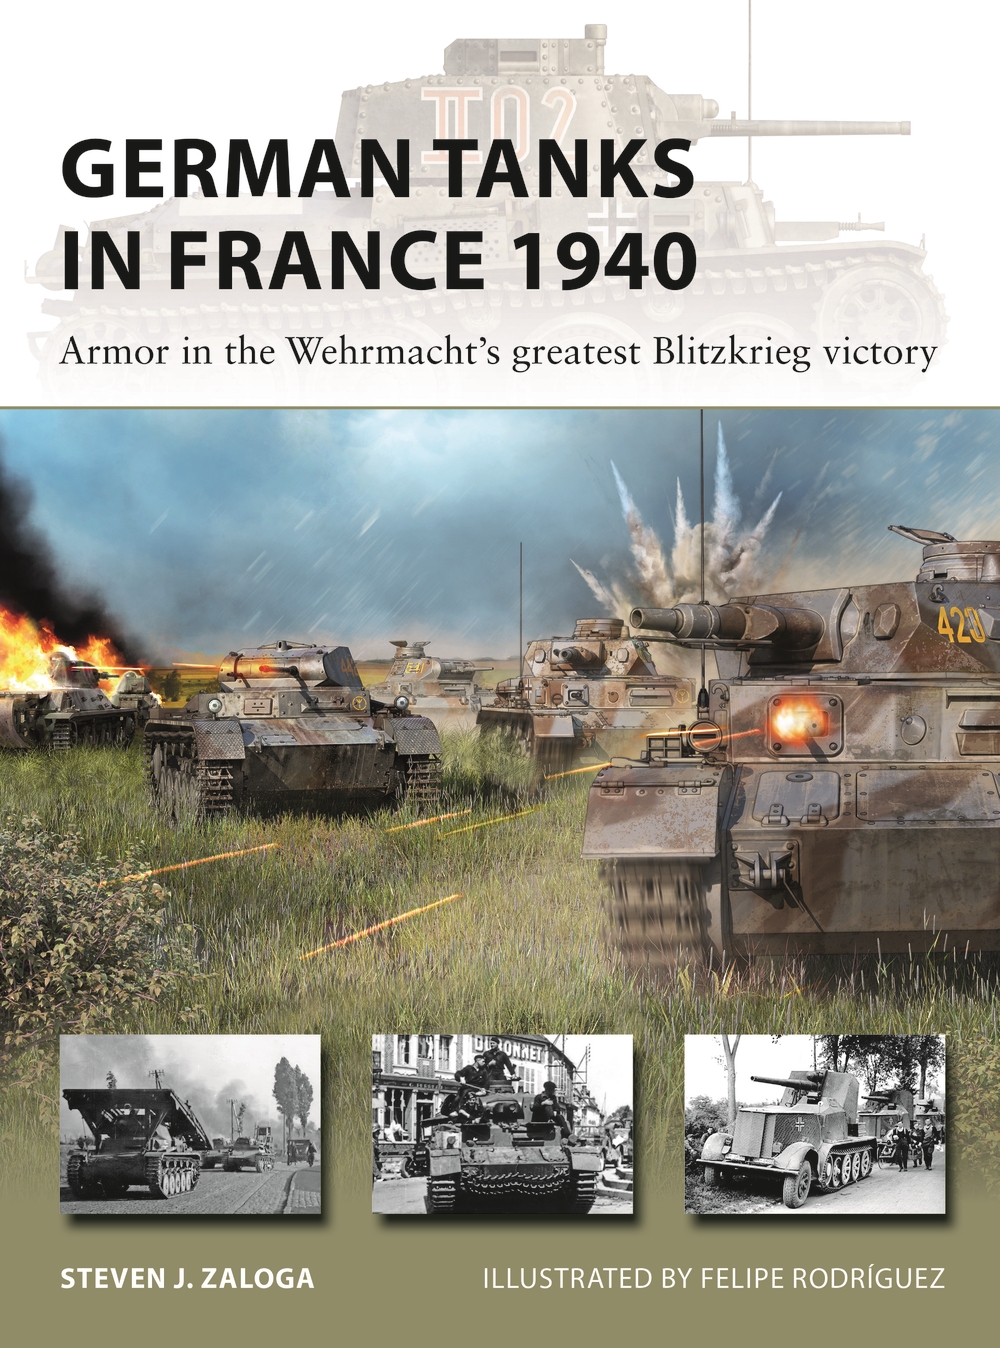 German Tanks in France 1940 book jacket